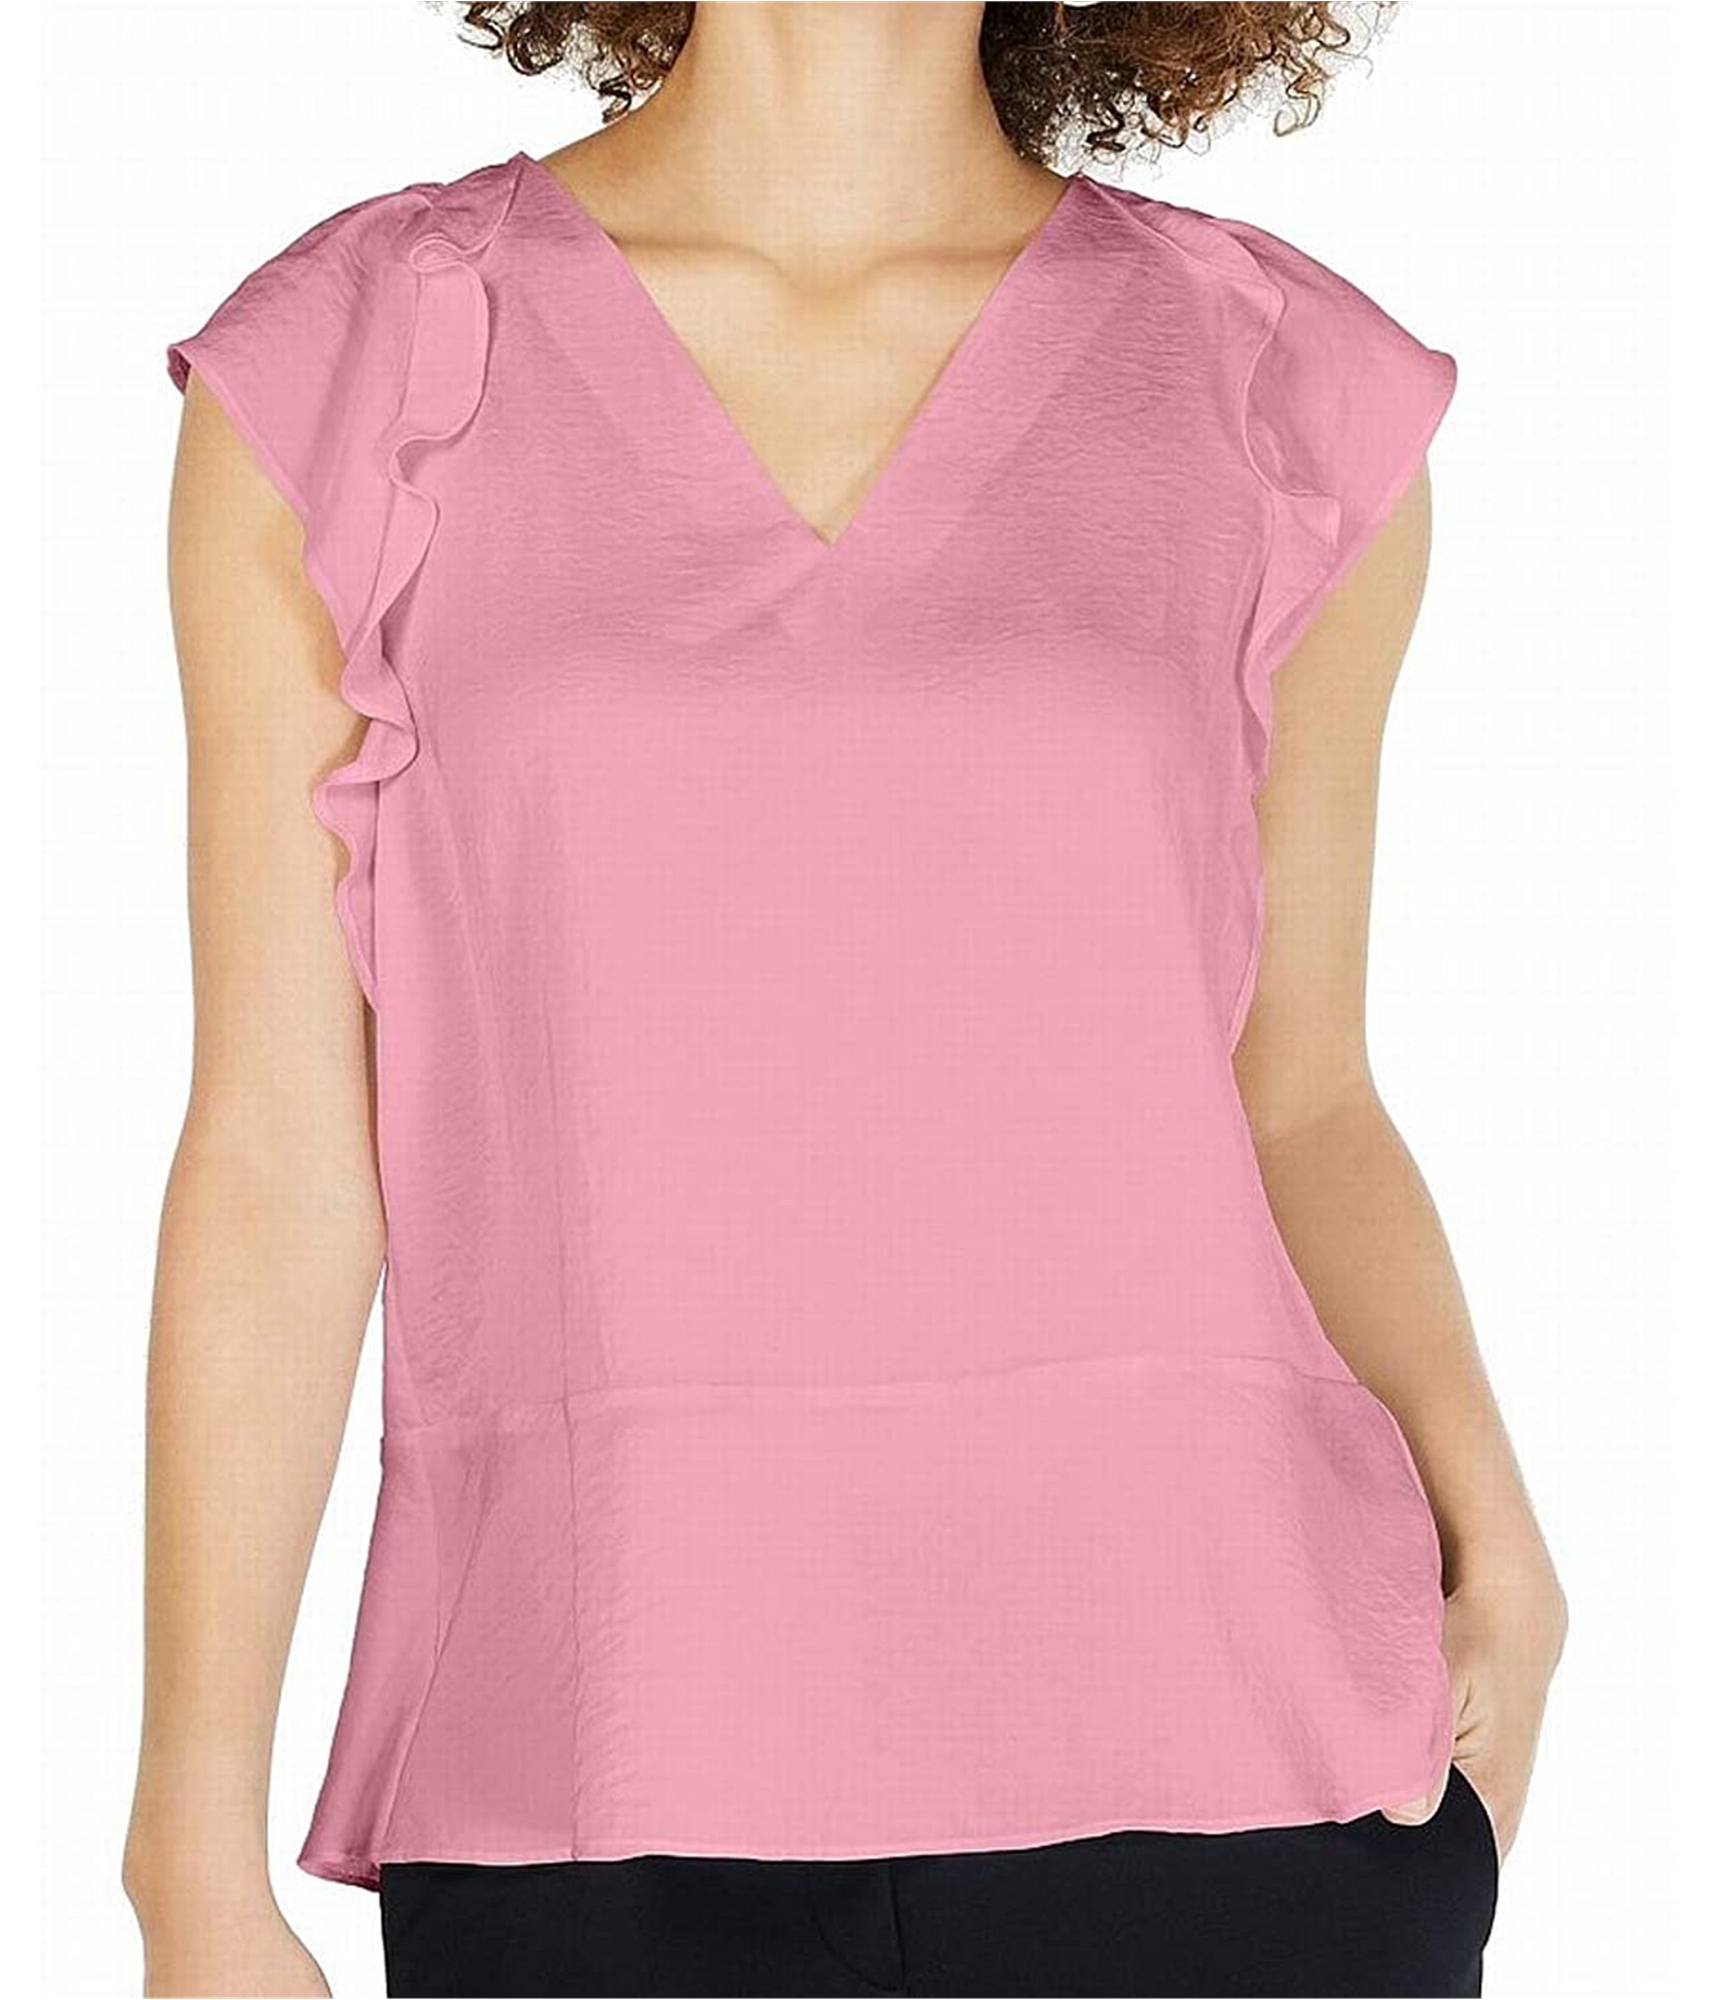 michael kors pink blouse